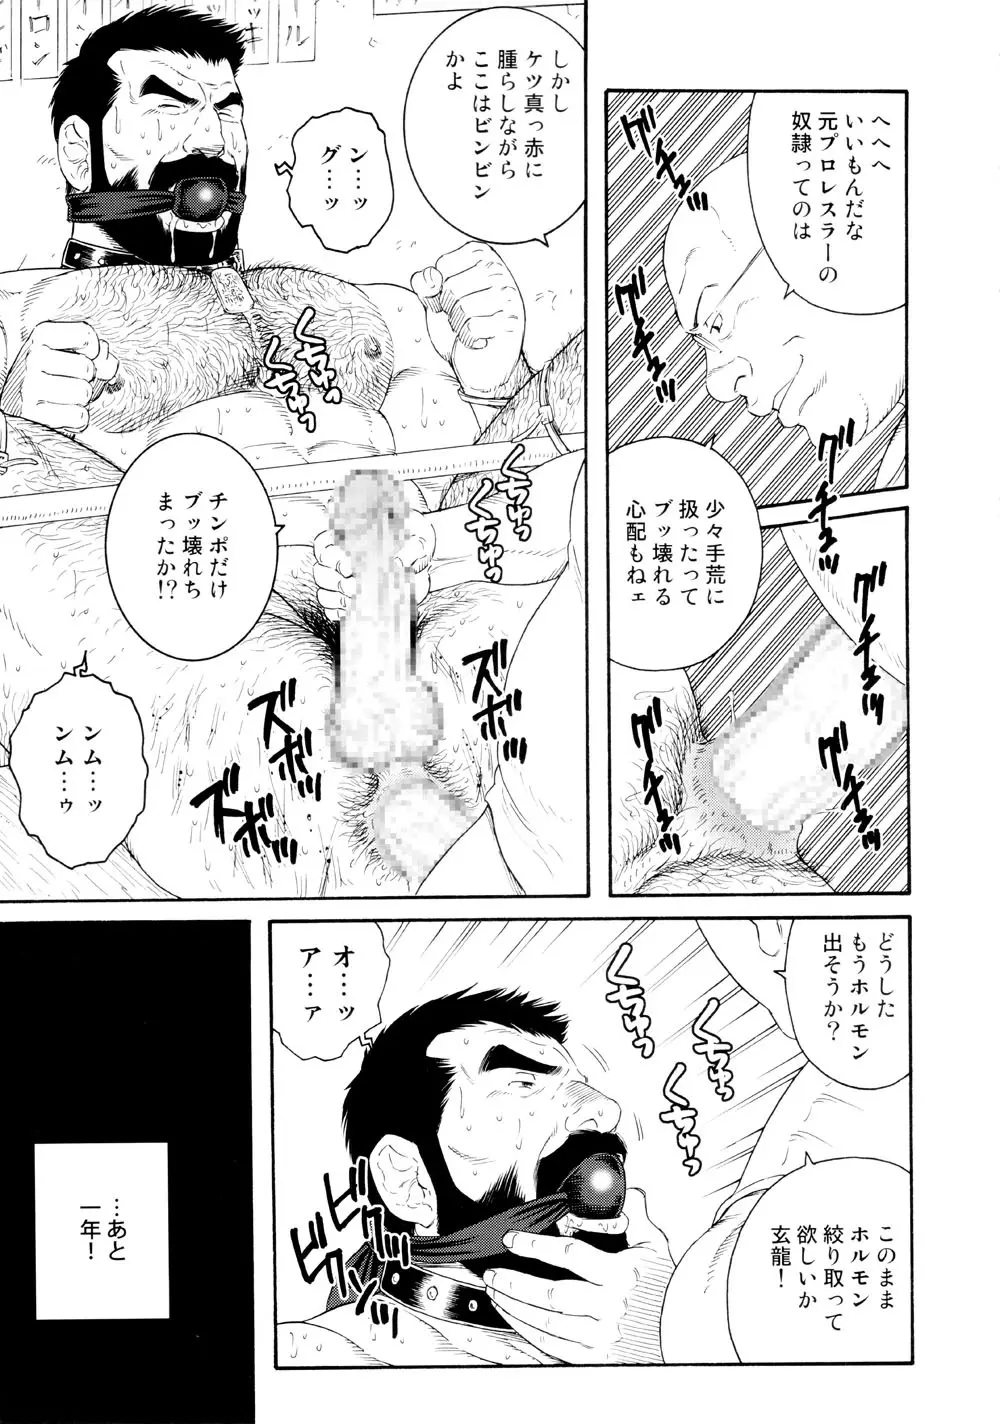 Genryu Chapter 3 13ページ